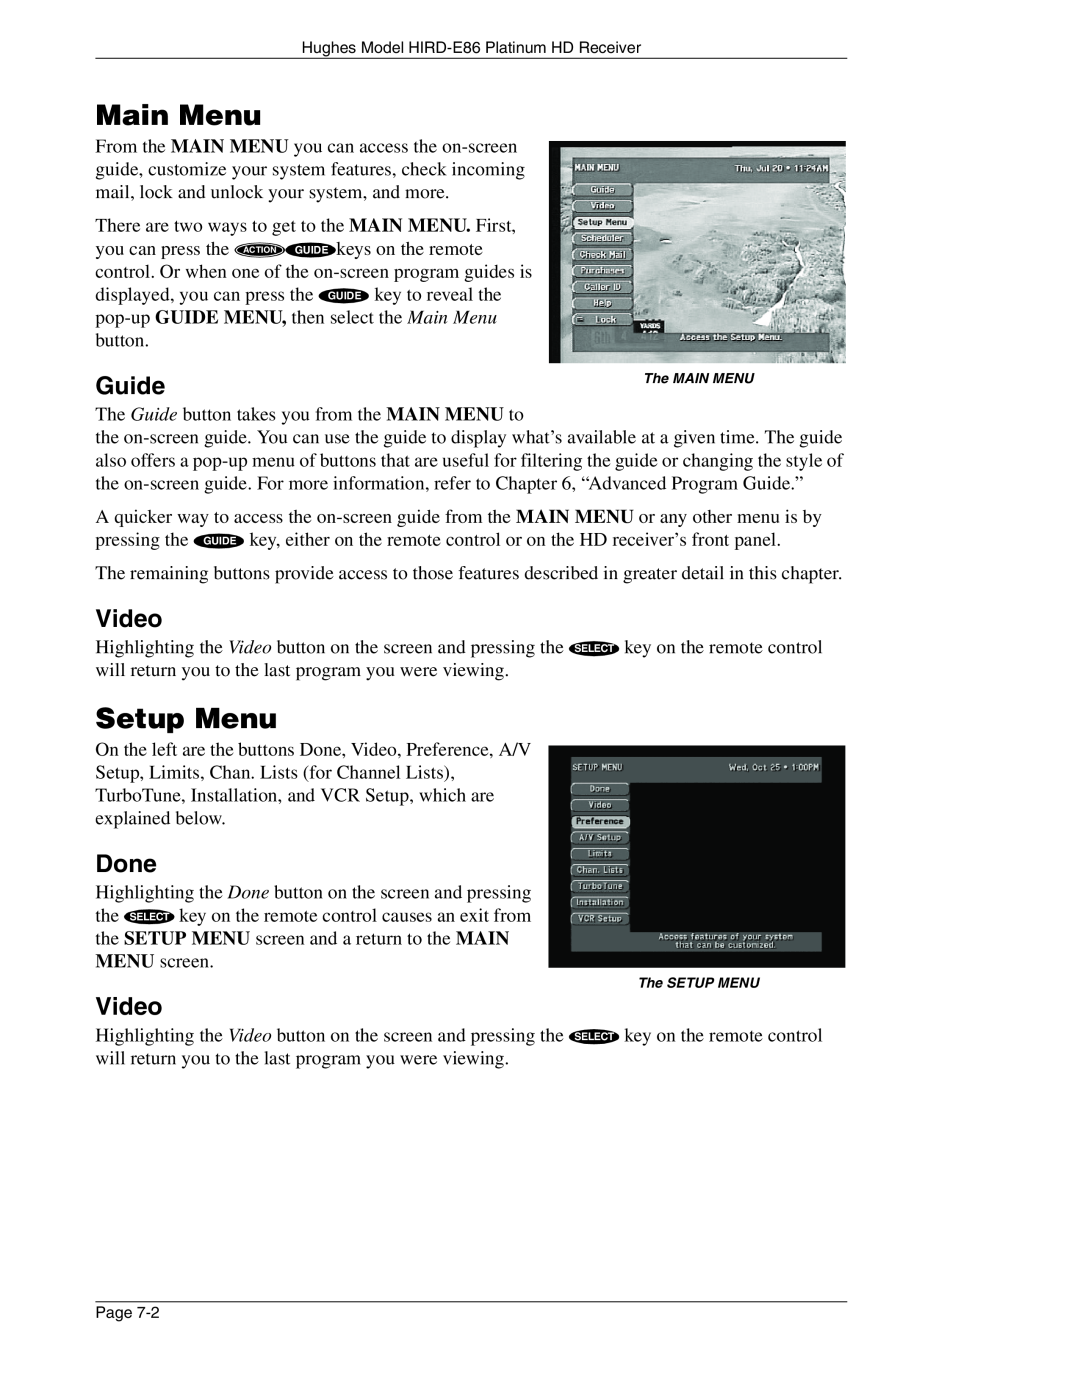 DirecTV HIRD-E86 manual Main Menu, Setup Menu, Guide, Video, Done 